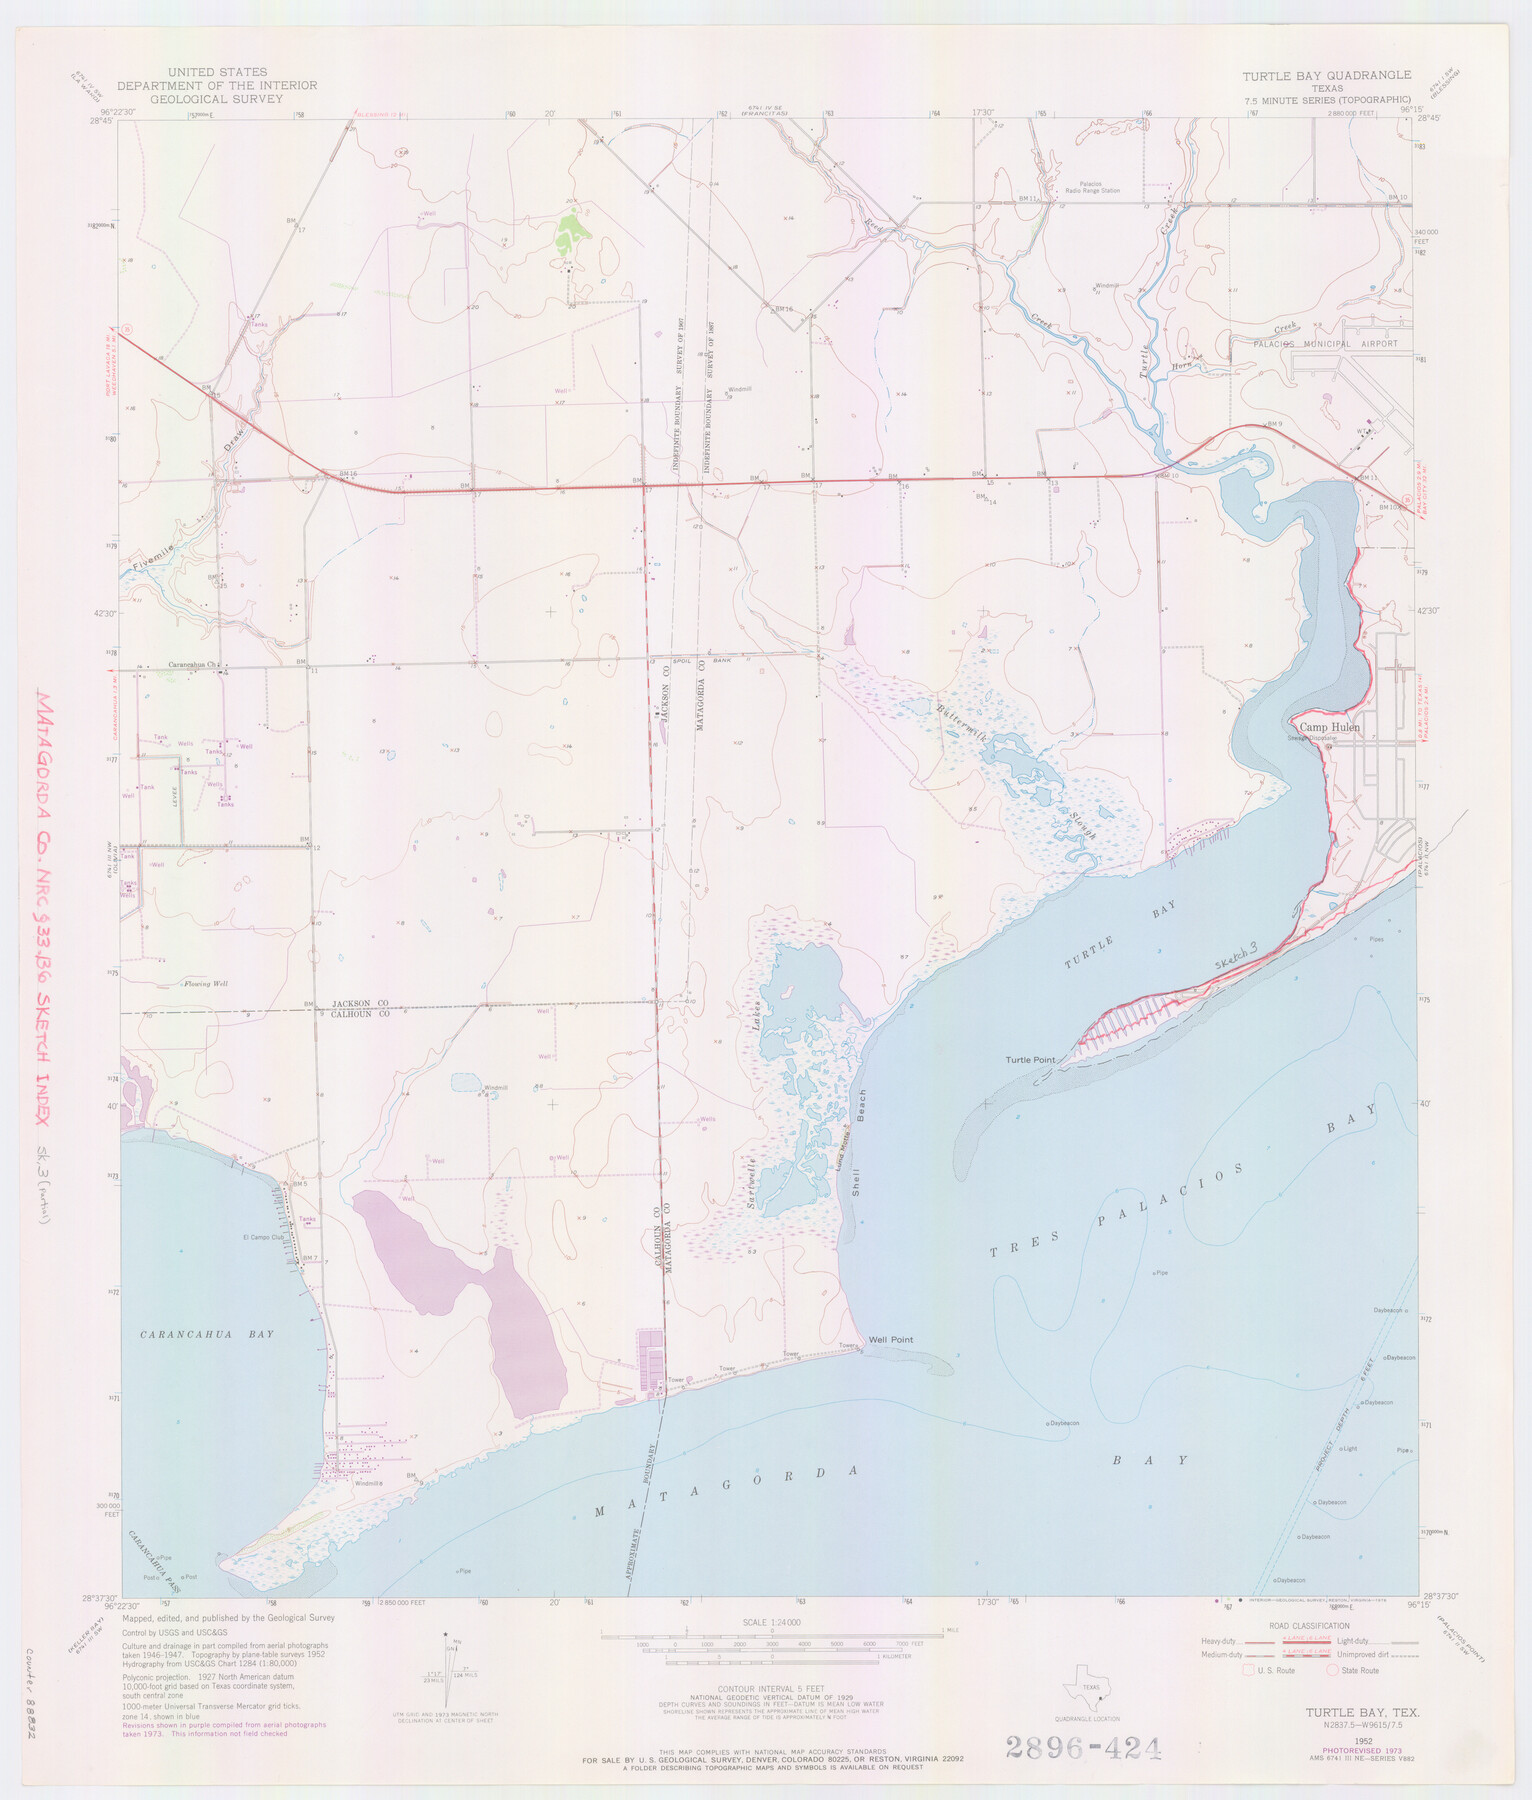 88832, Matagorda County NRC Article 33.136 Location Key Sheet, General Map Collection